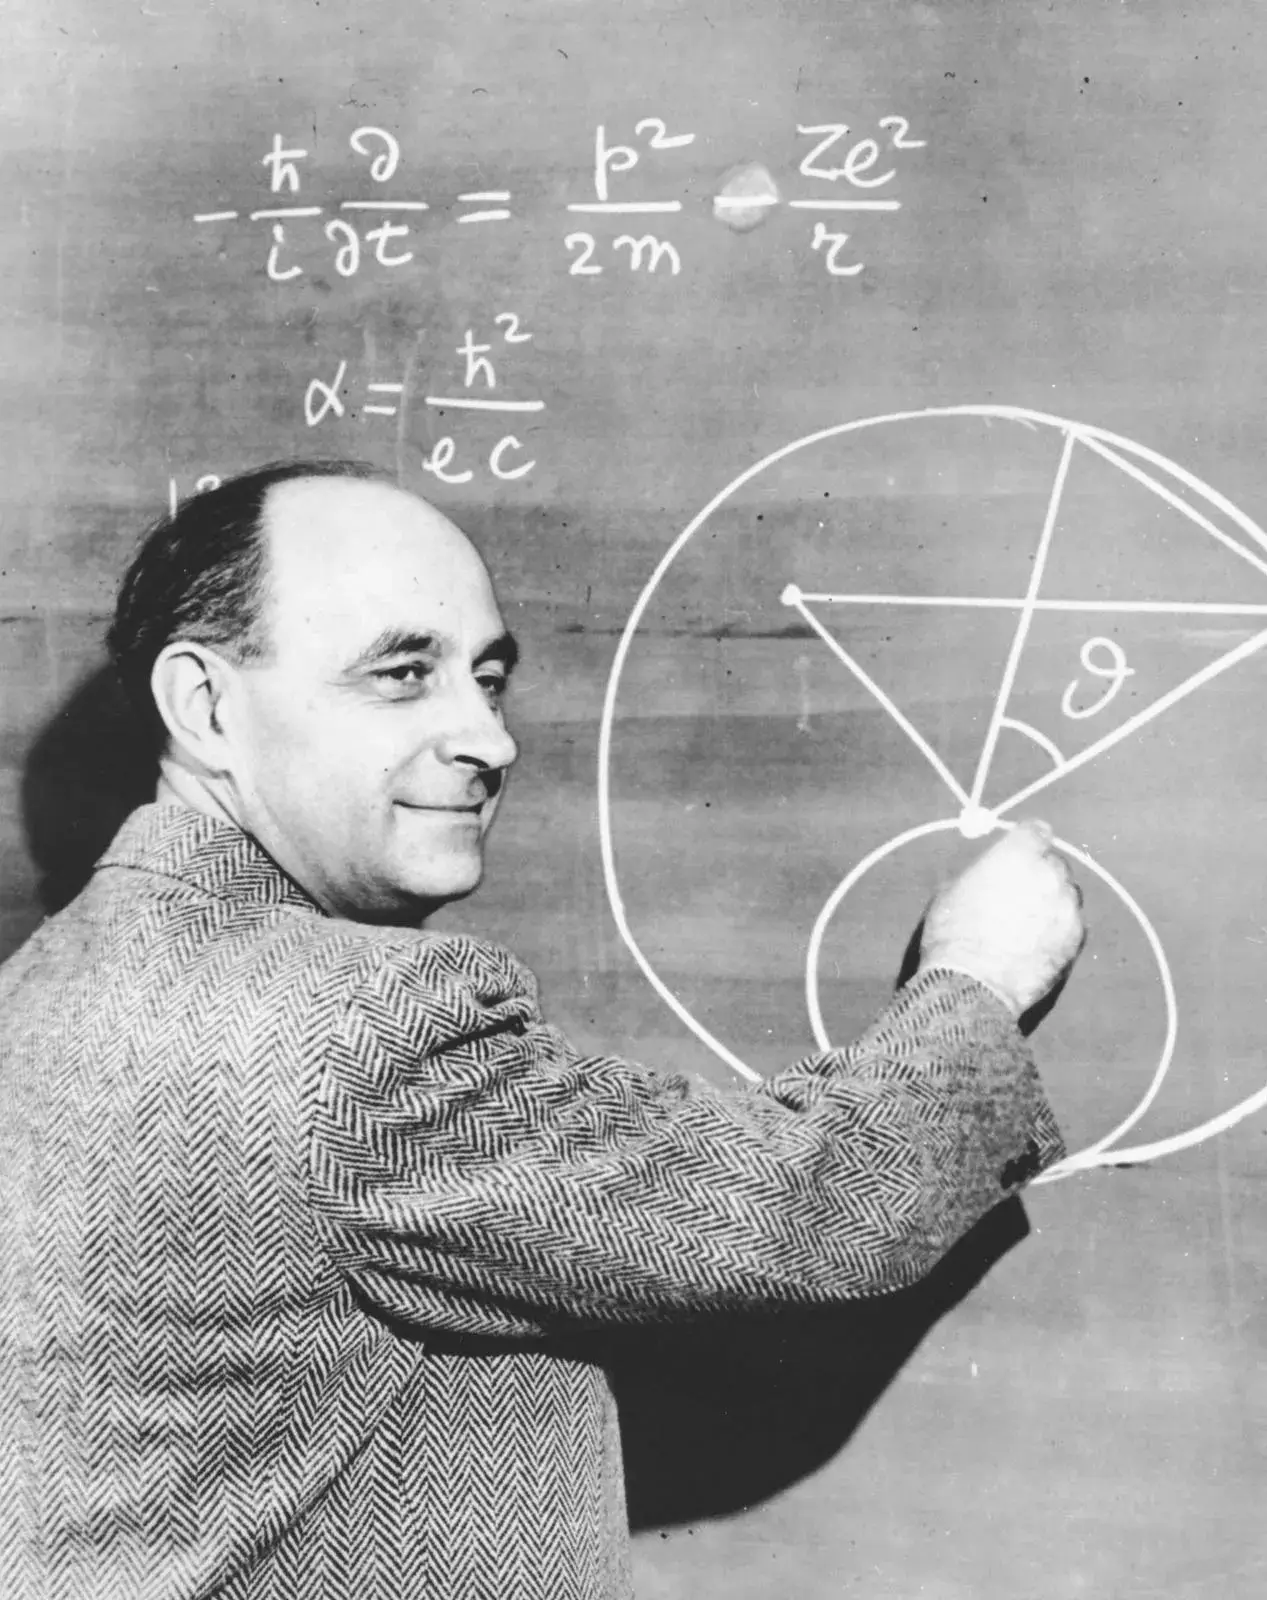 Enrico Fermi completes a physics equation on a chalkboard.